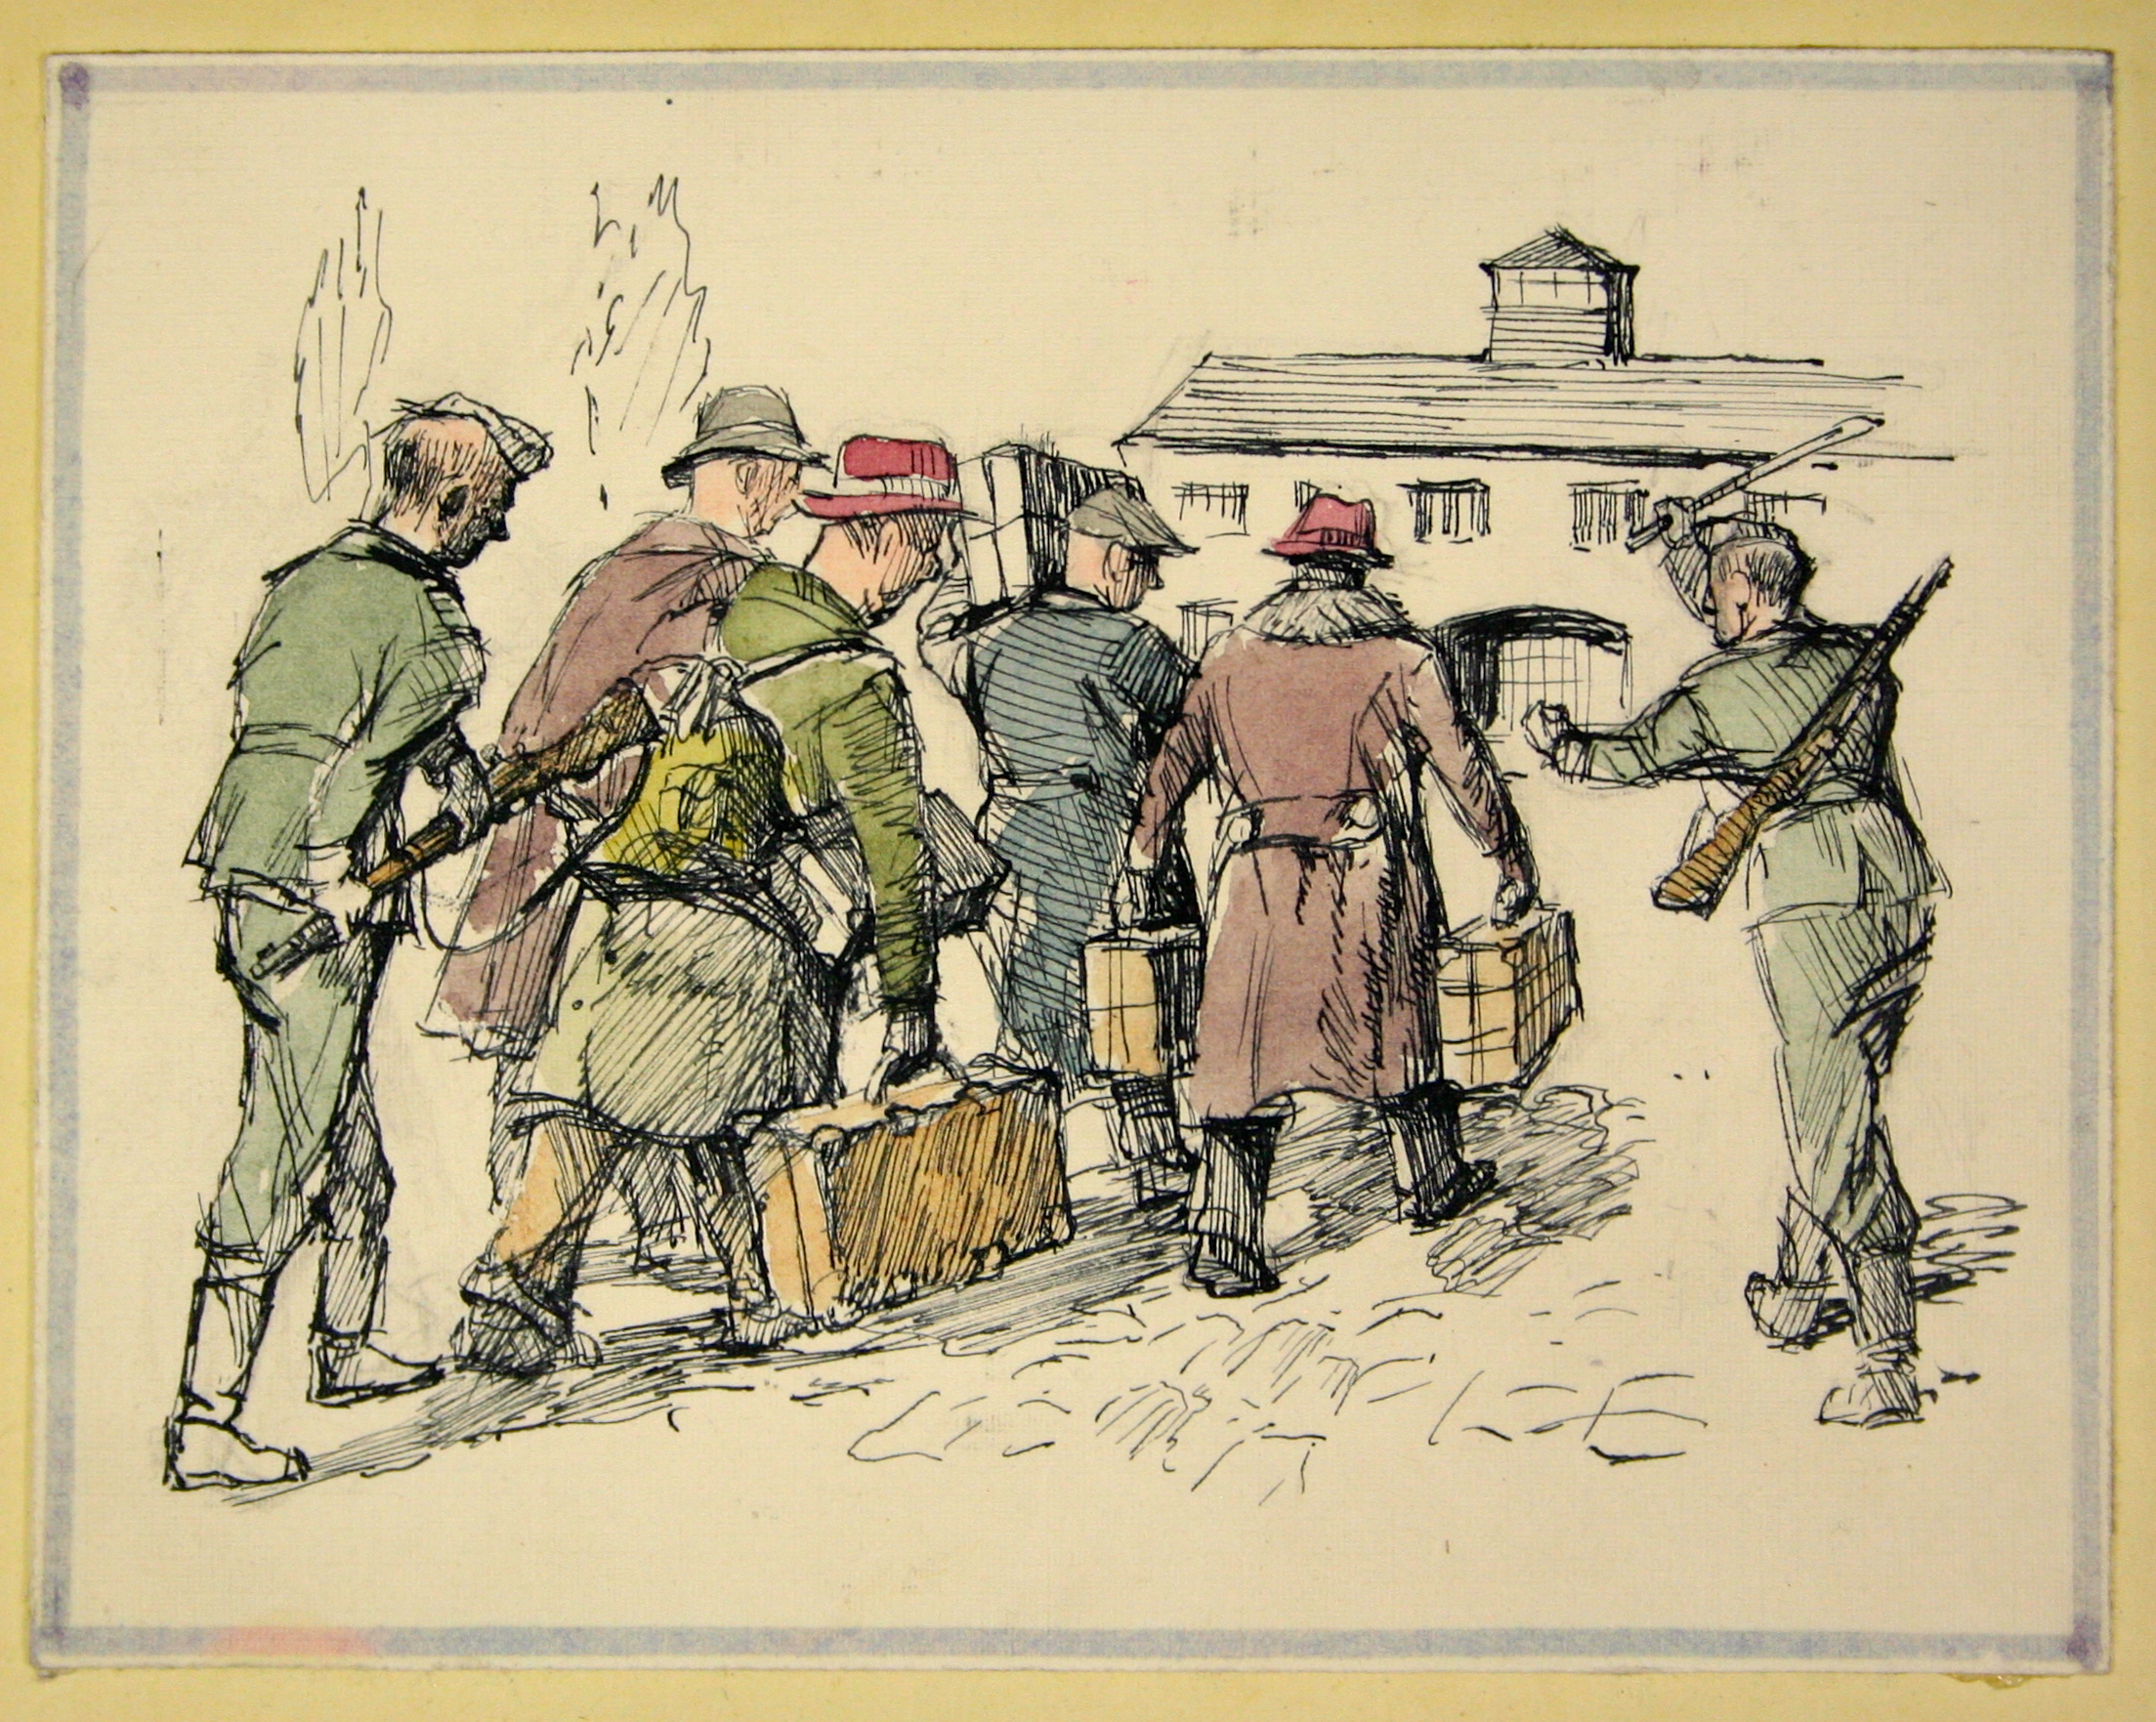 An illustration from the Dachau Album